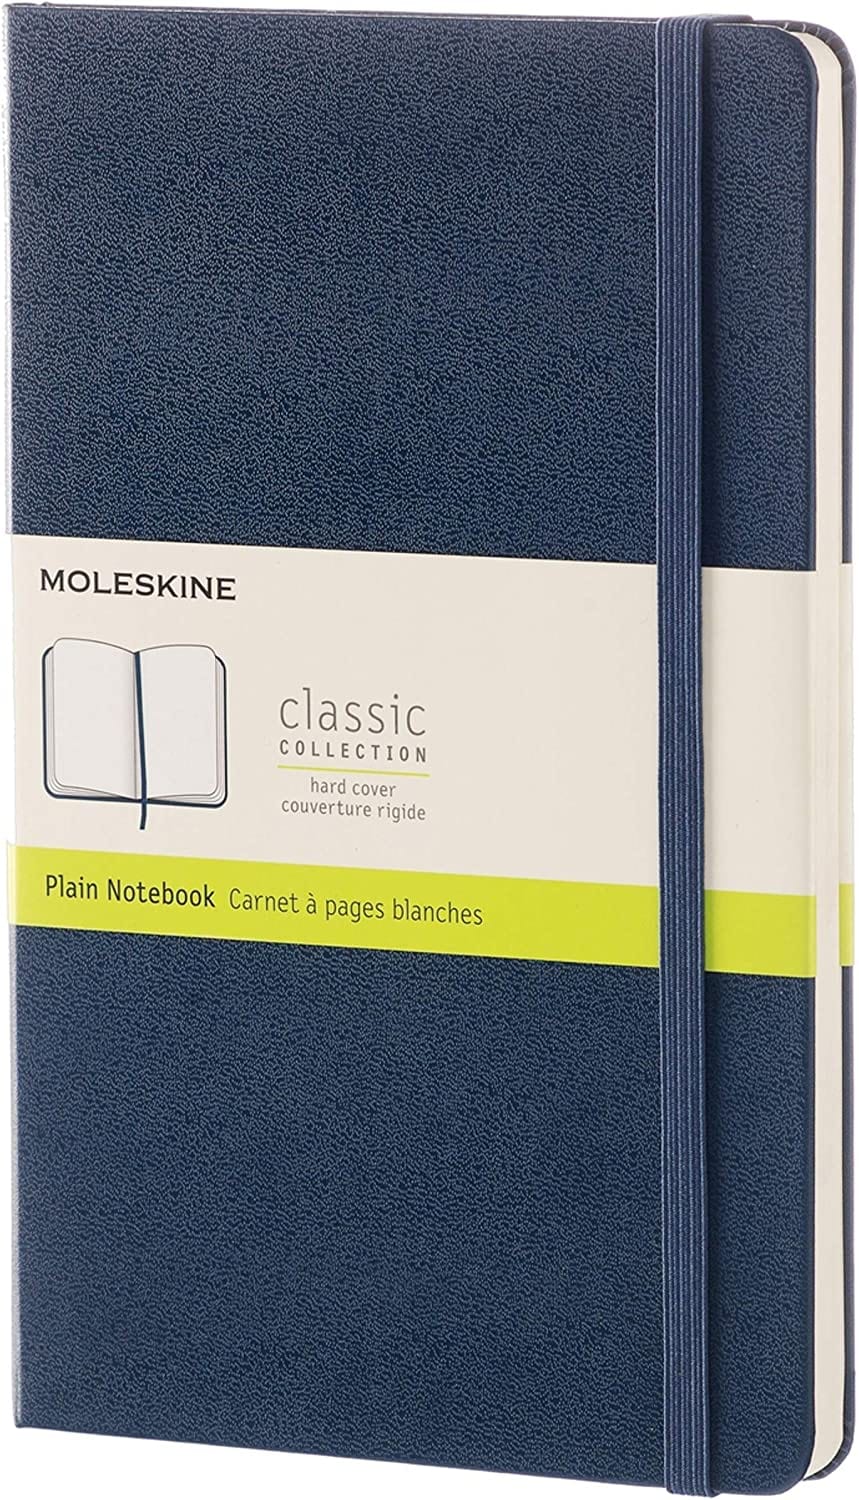 Moleskine Papir Pocket / Blue / Hardcover Moleskine Classic notesbog - Plain